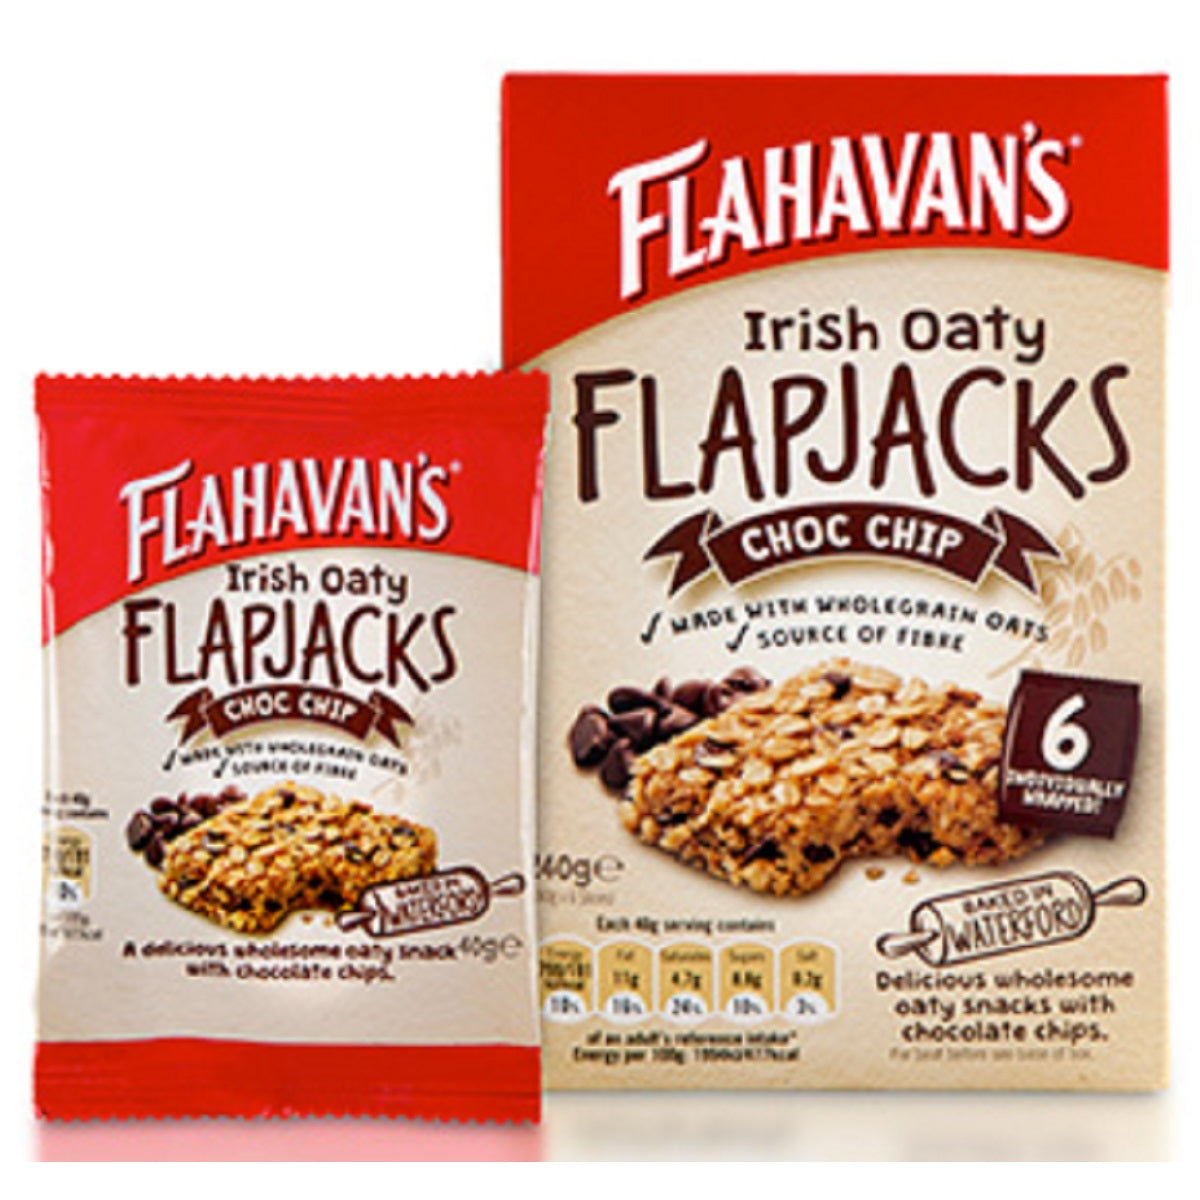 Flahavan’s Irish Oaty Flapjacks Choc Chip 6x40g